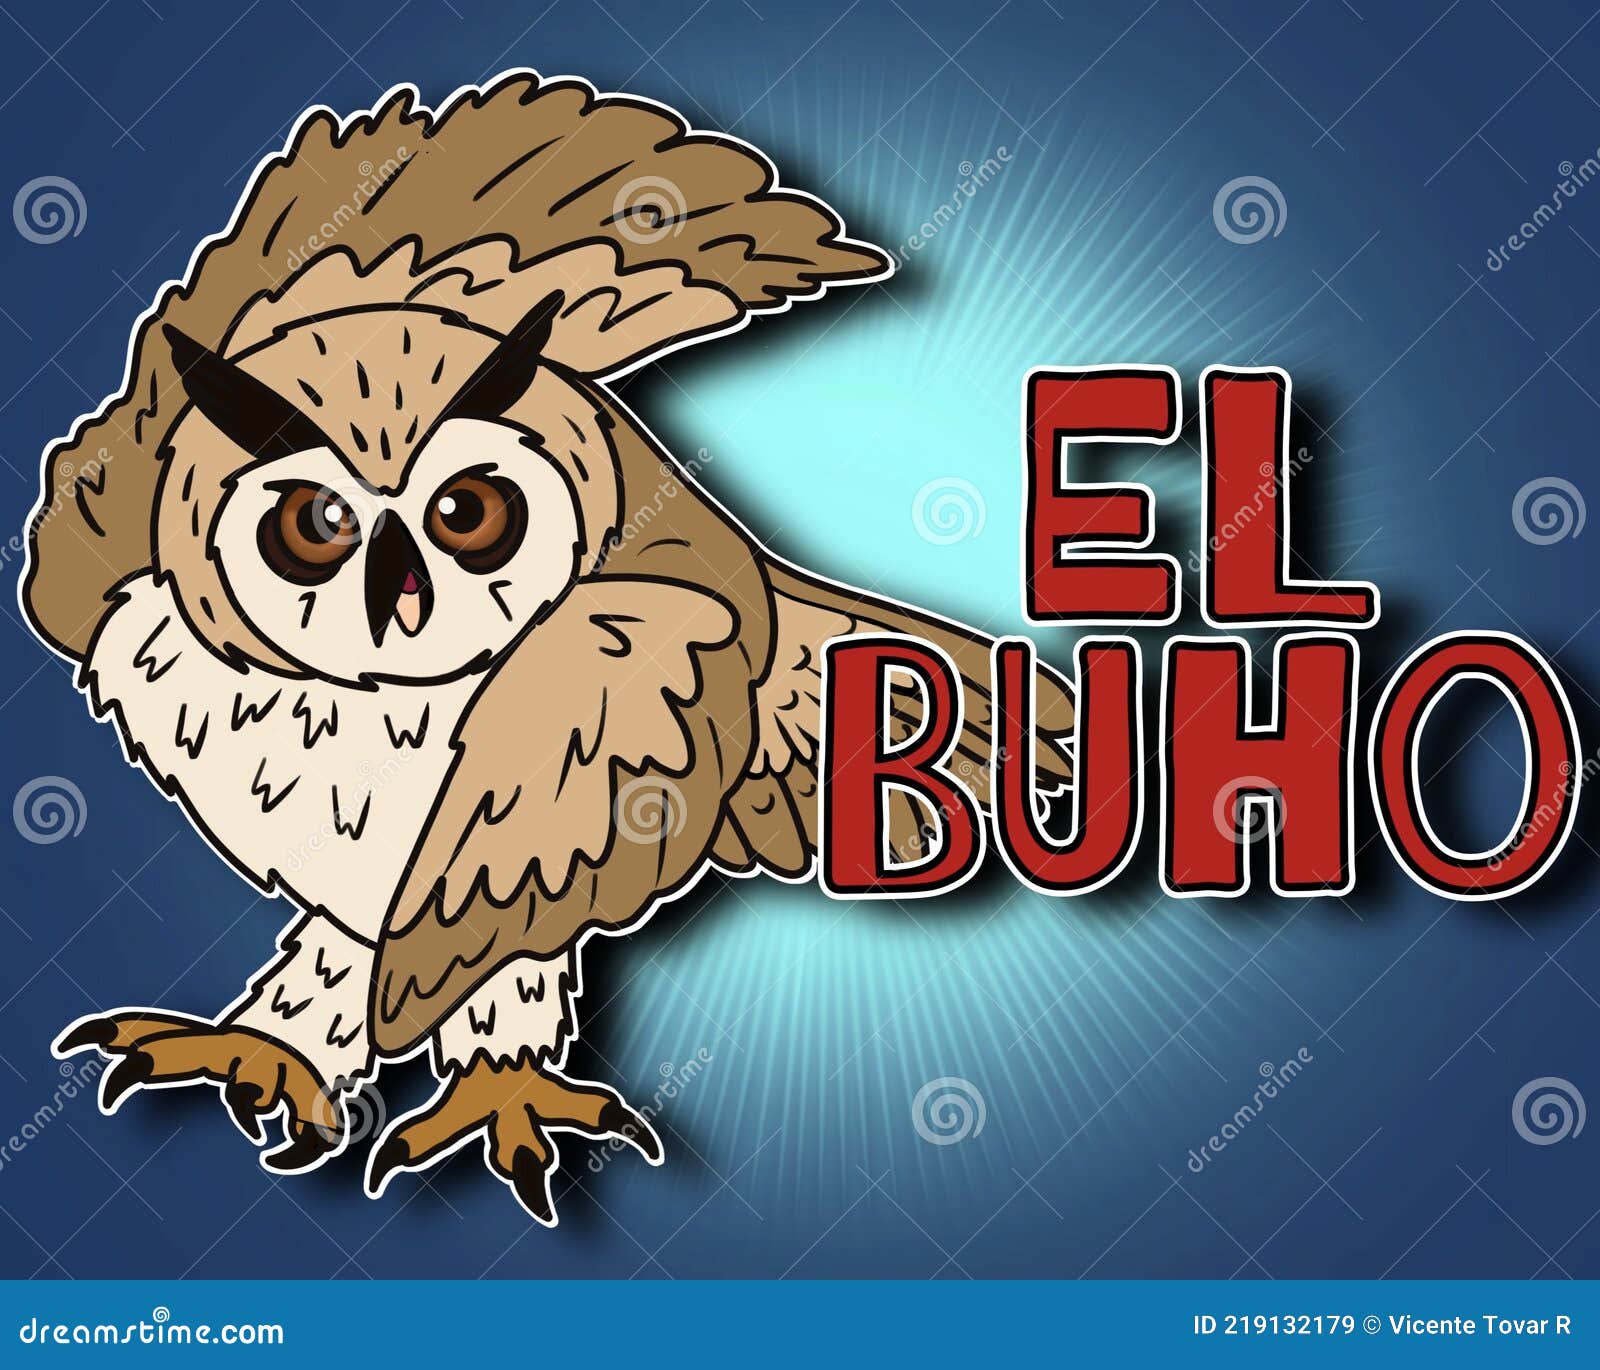 Owl in spanish language